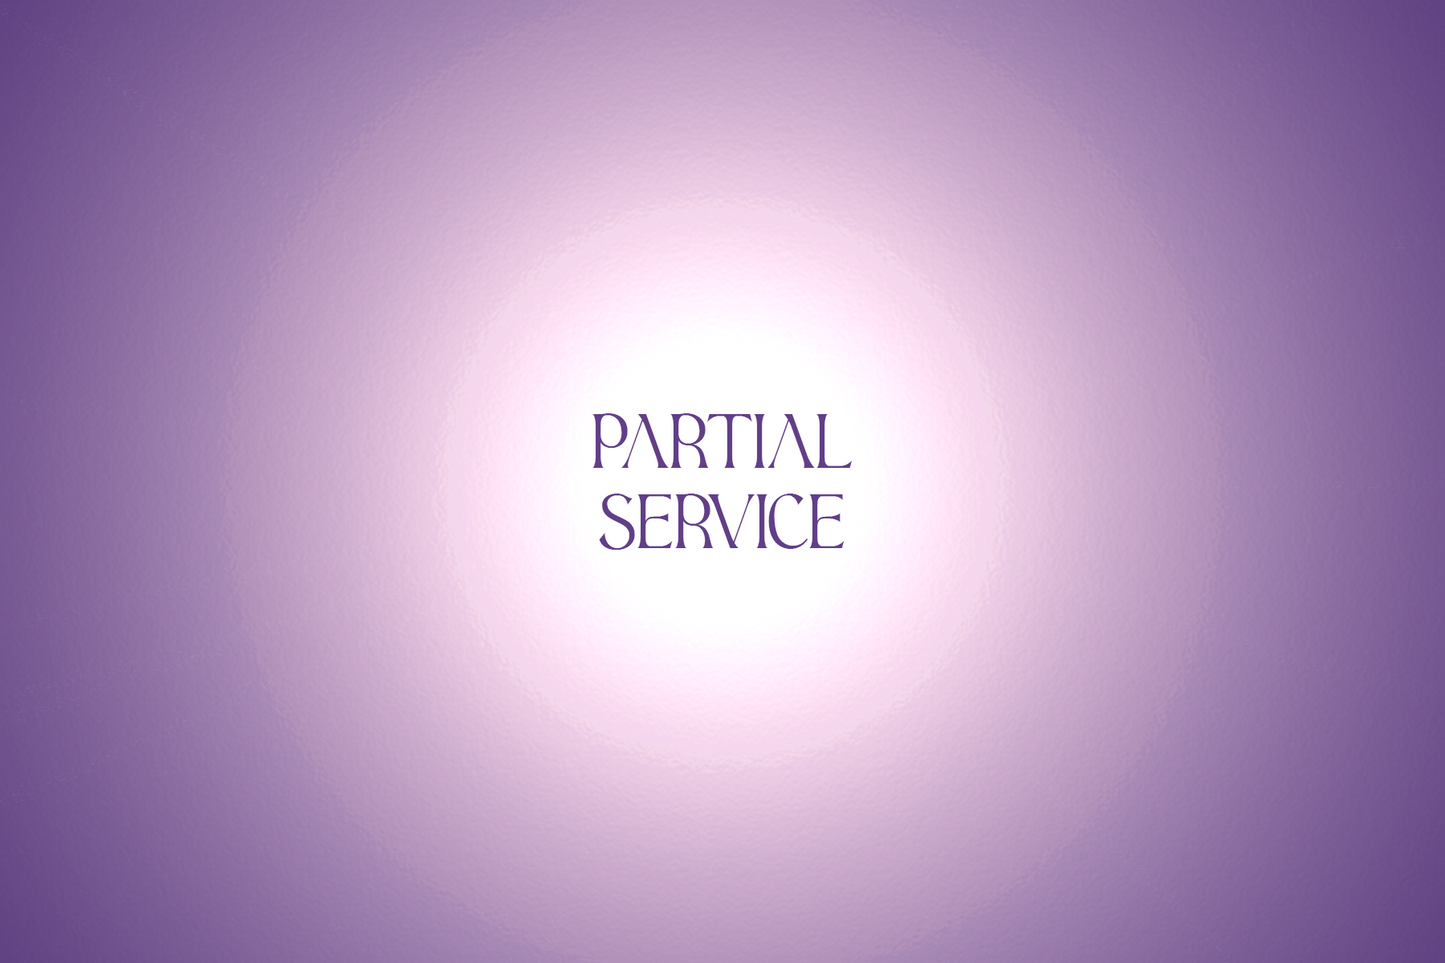 Partial Service